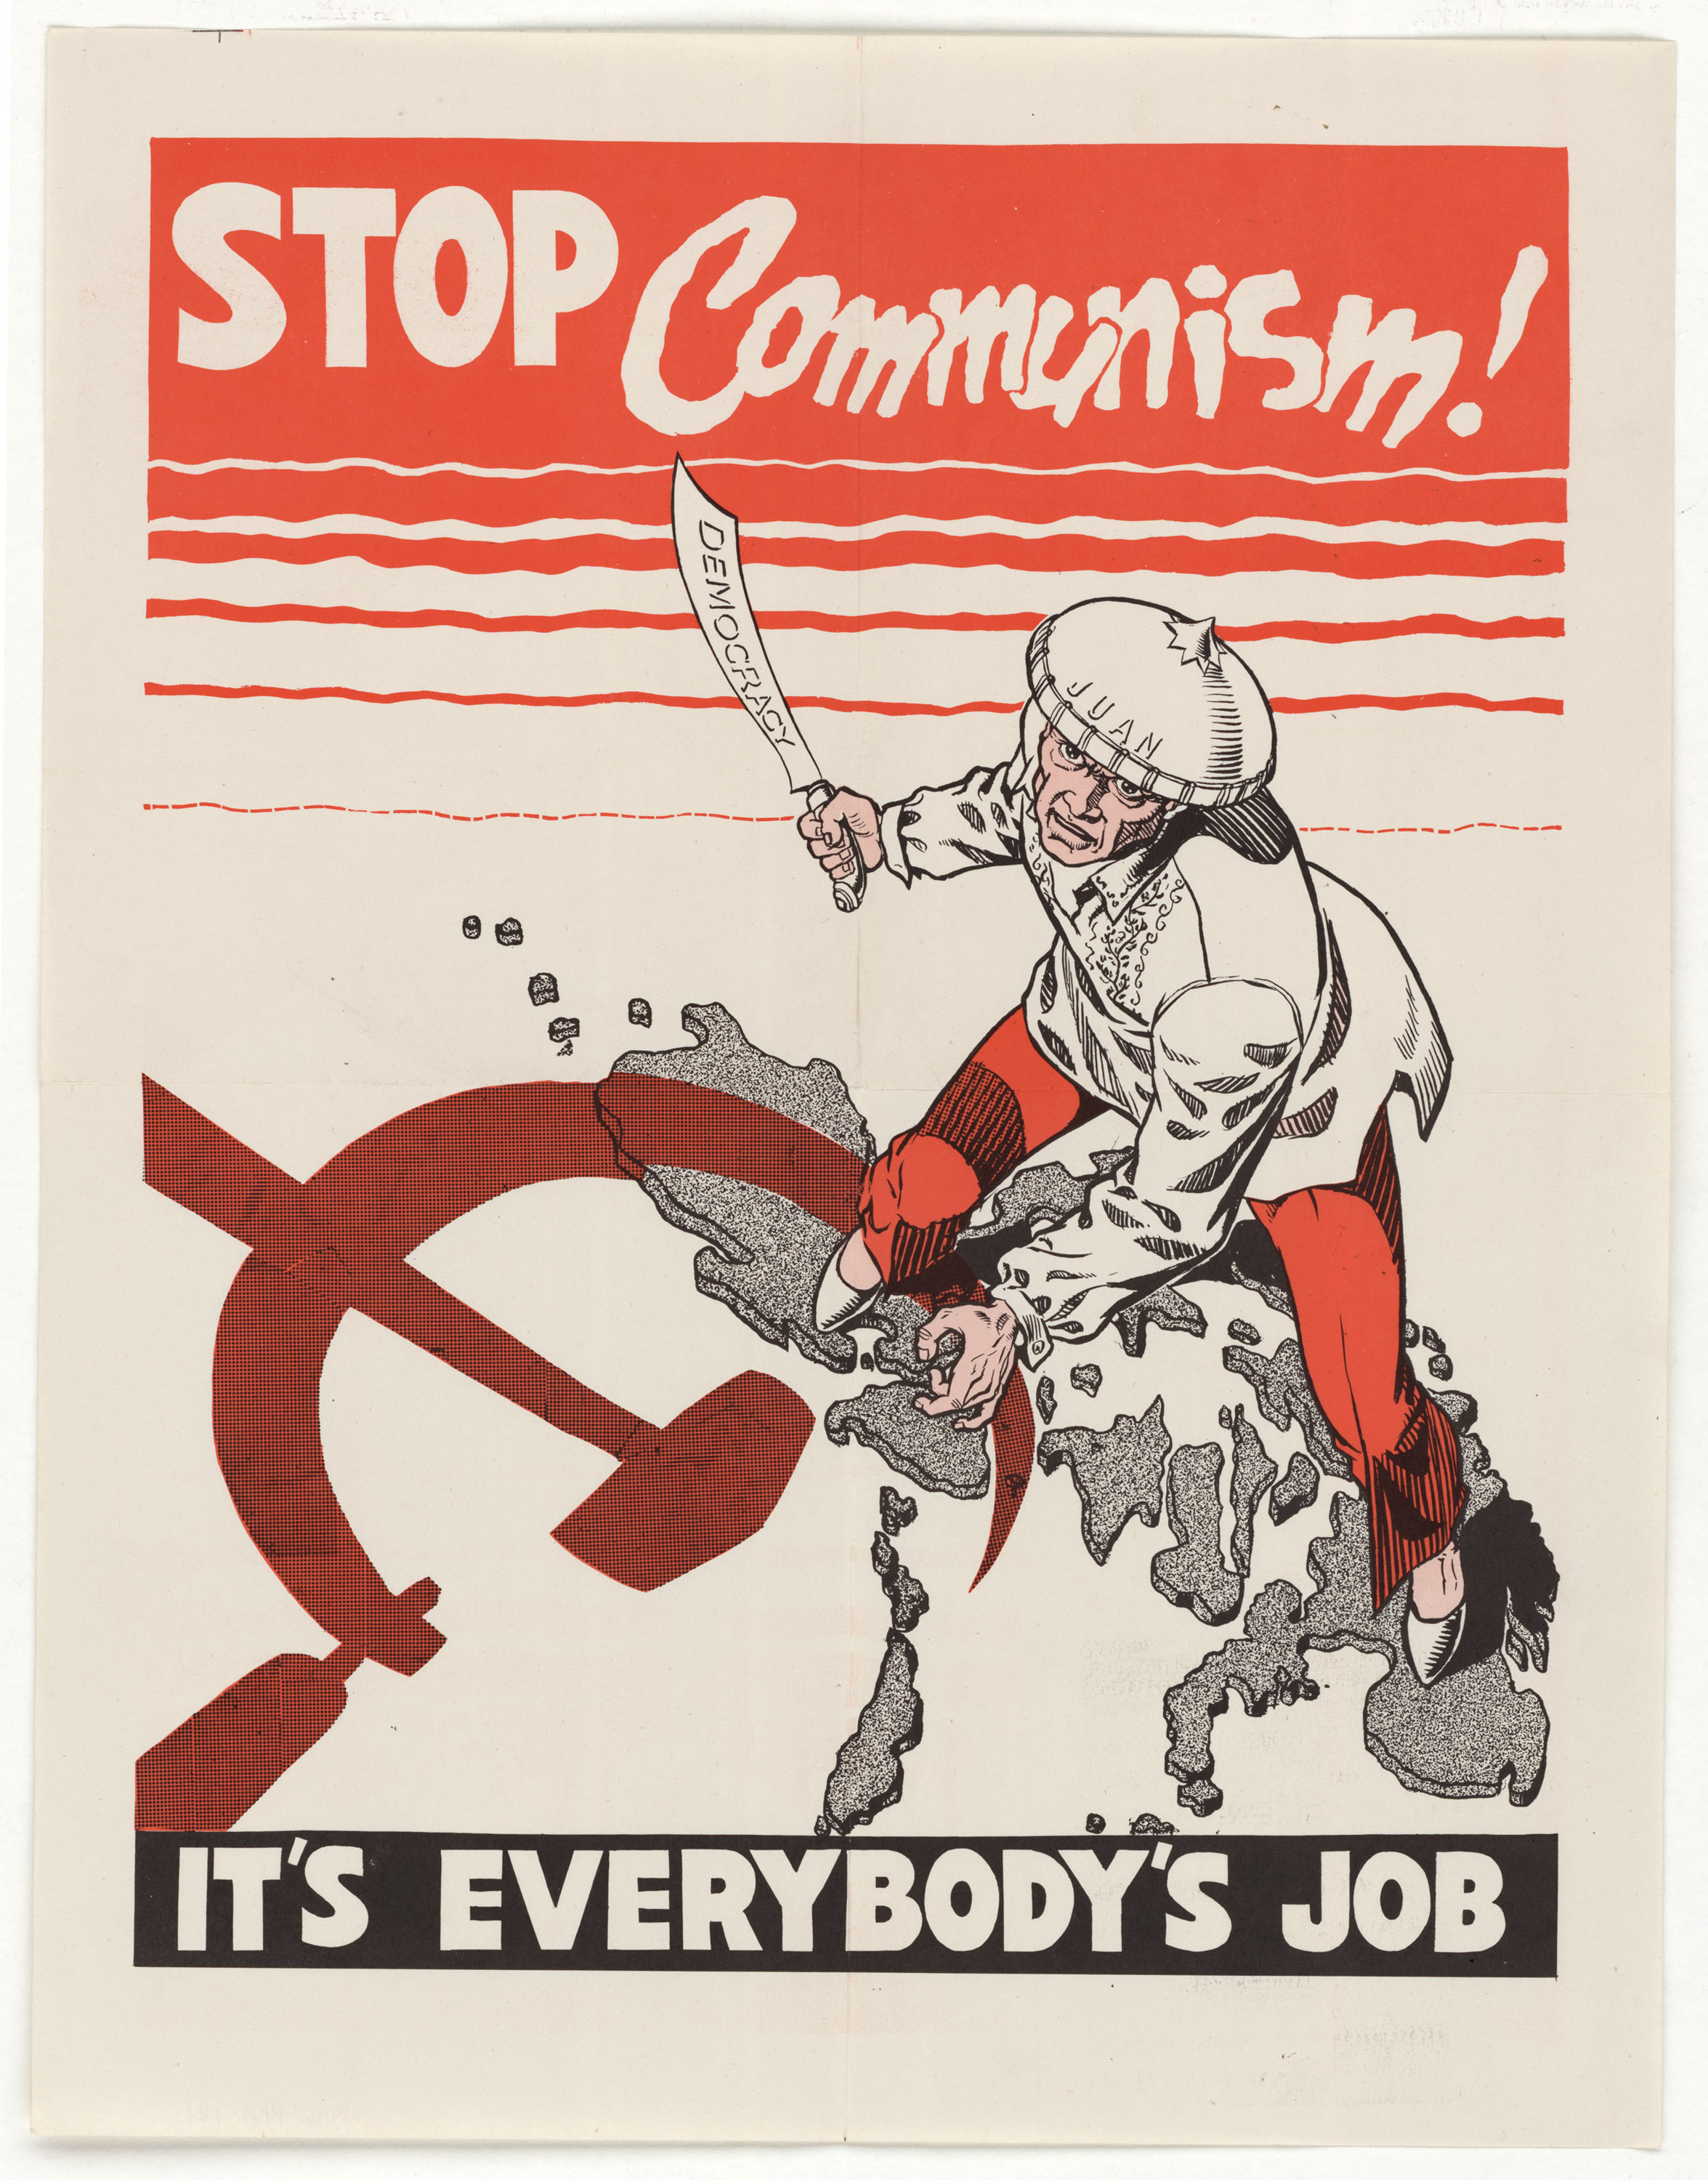 Thumbnail for File:Stop Communism propaganda poster.jpg